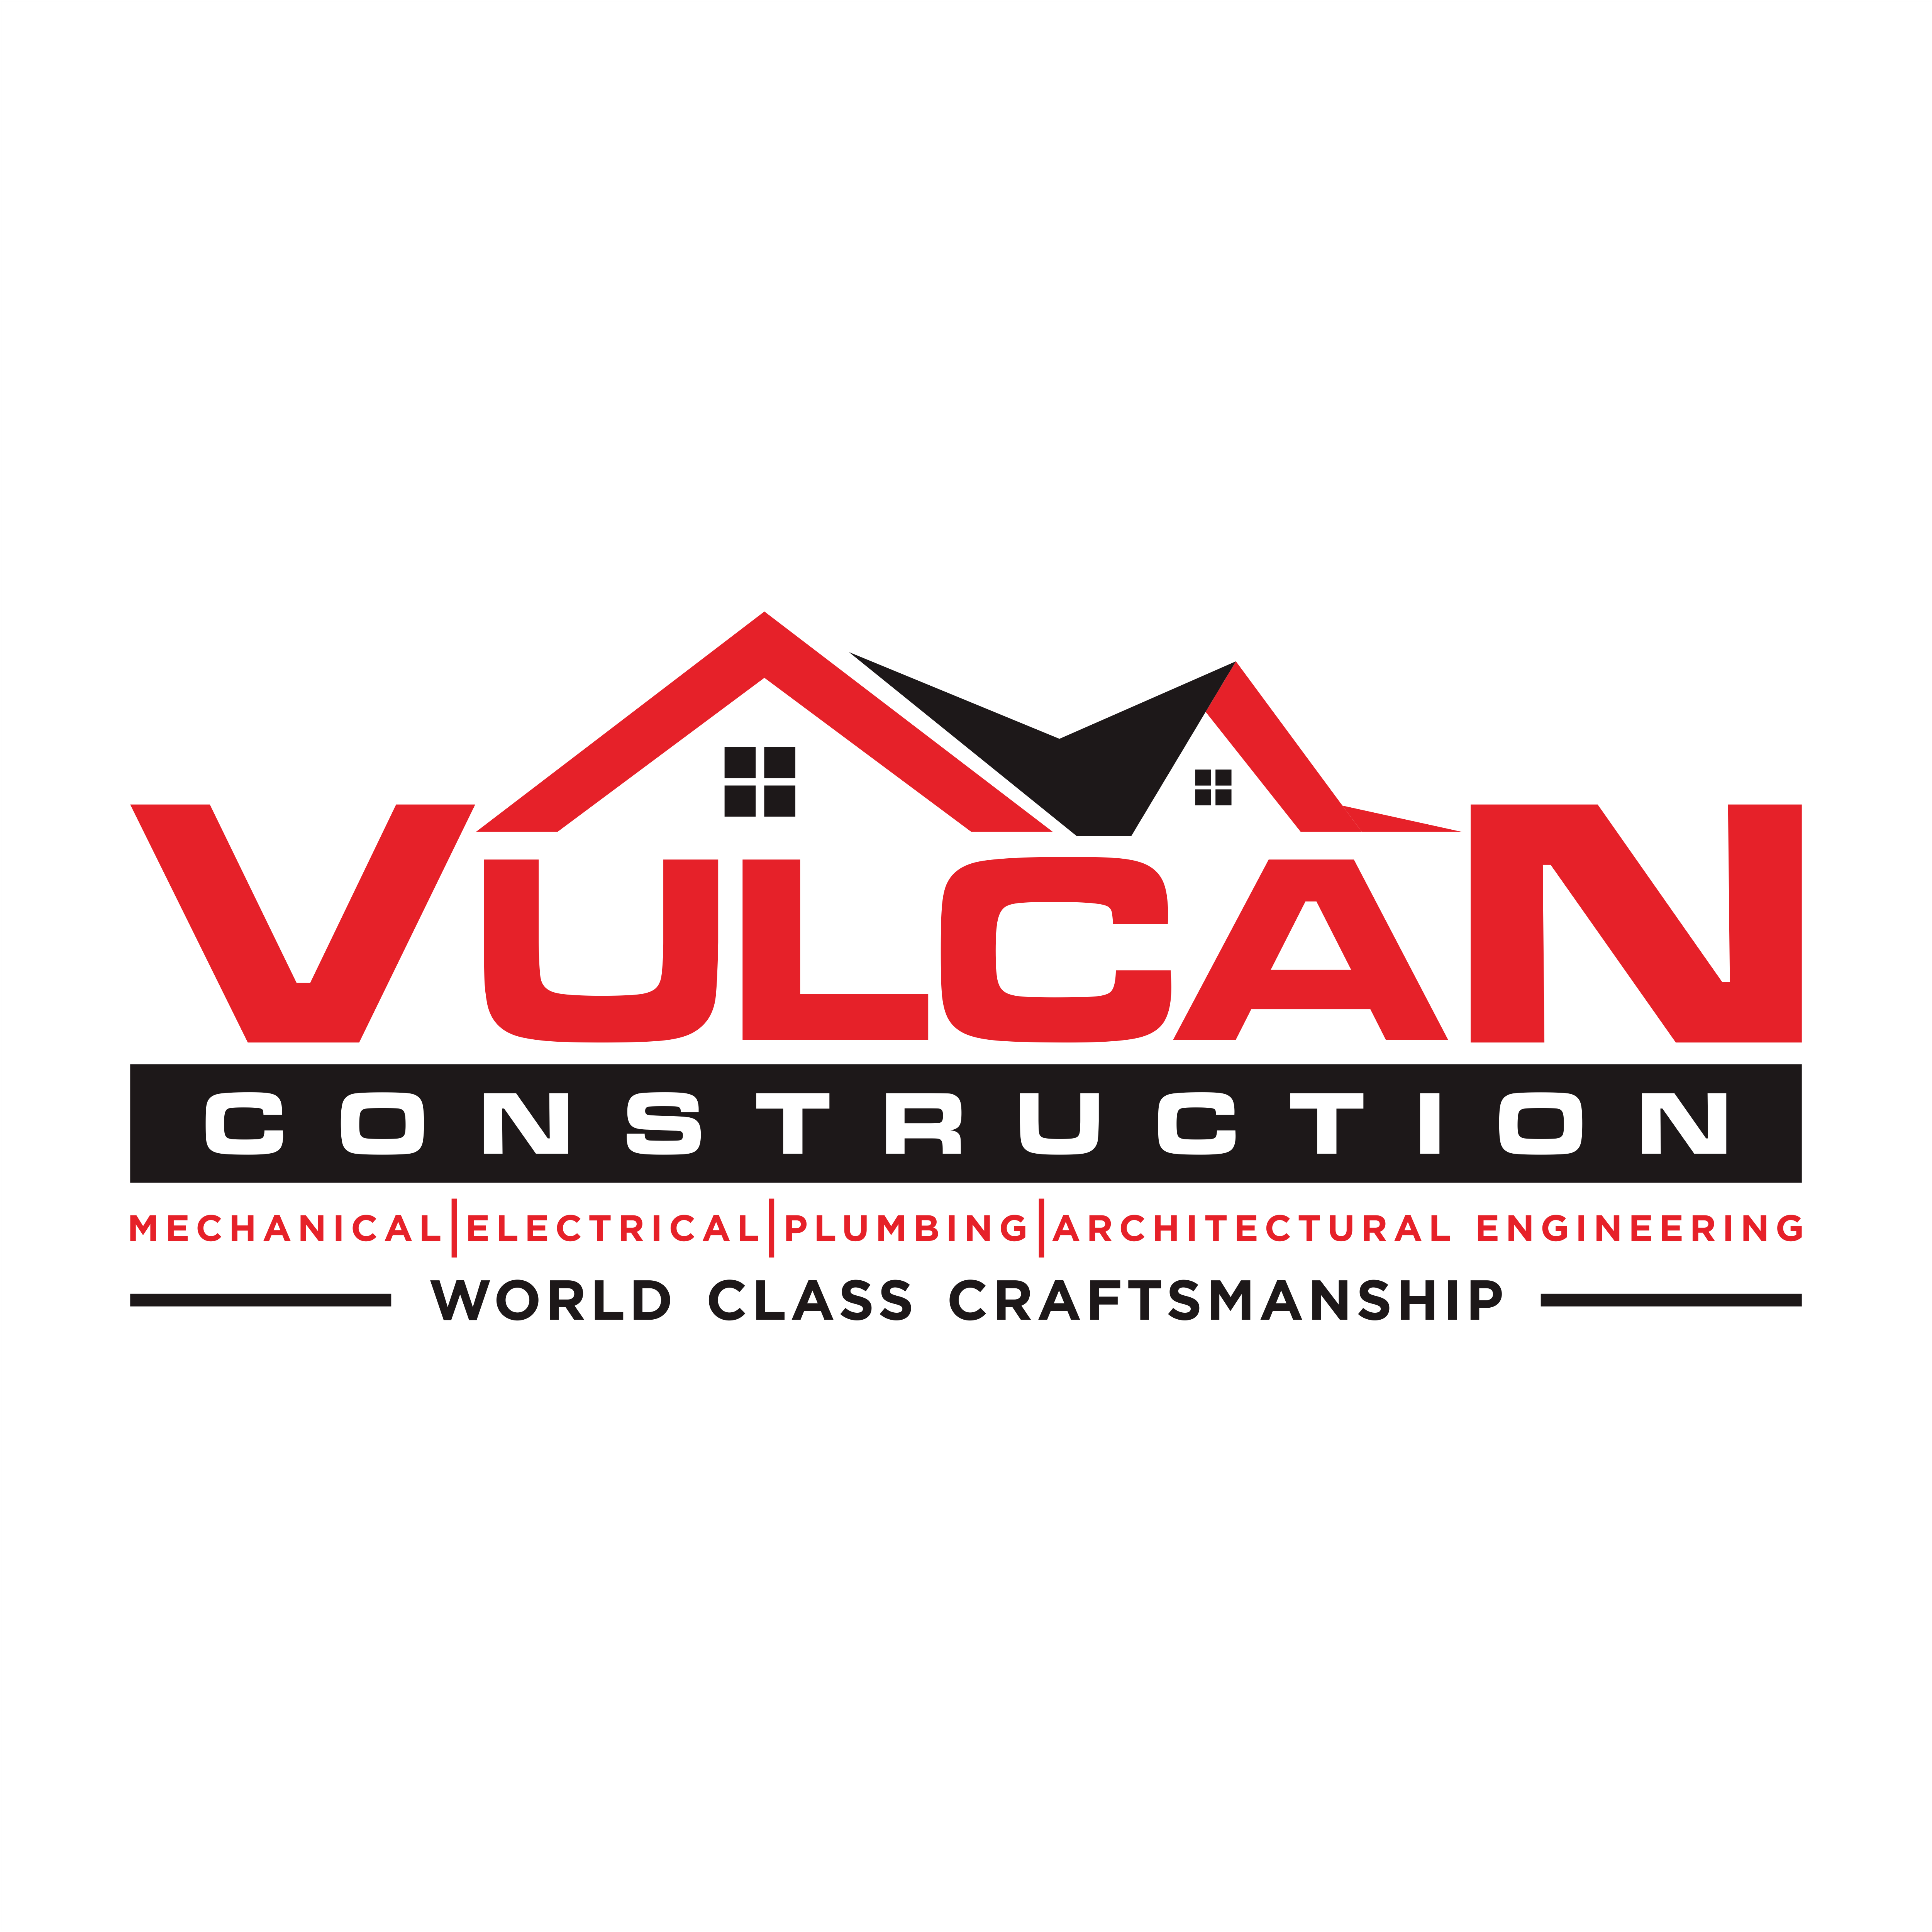 VULCAN CONSTRUCTION LOGO